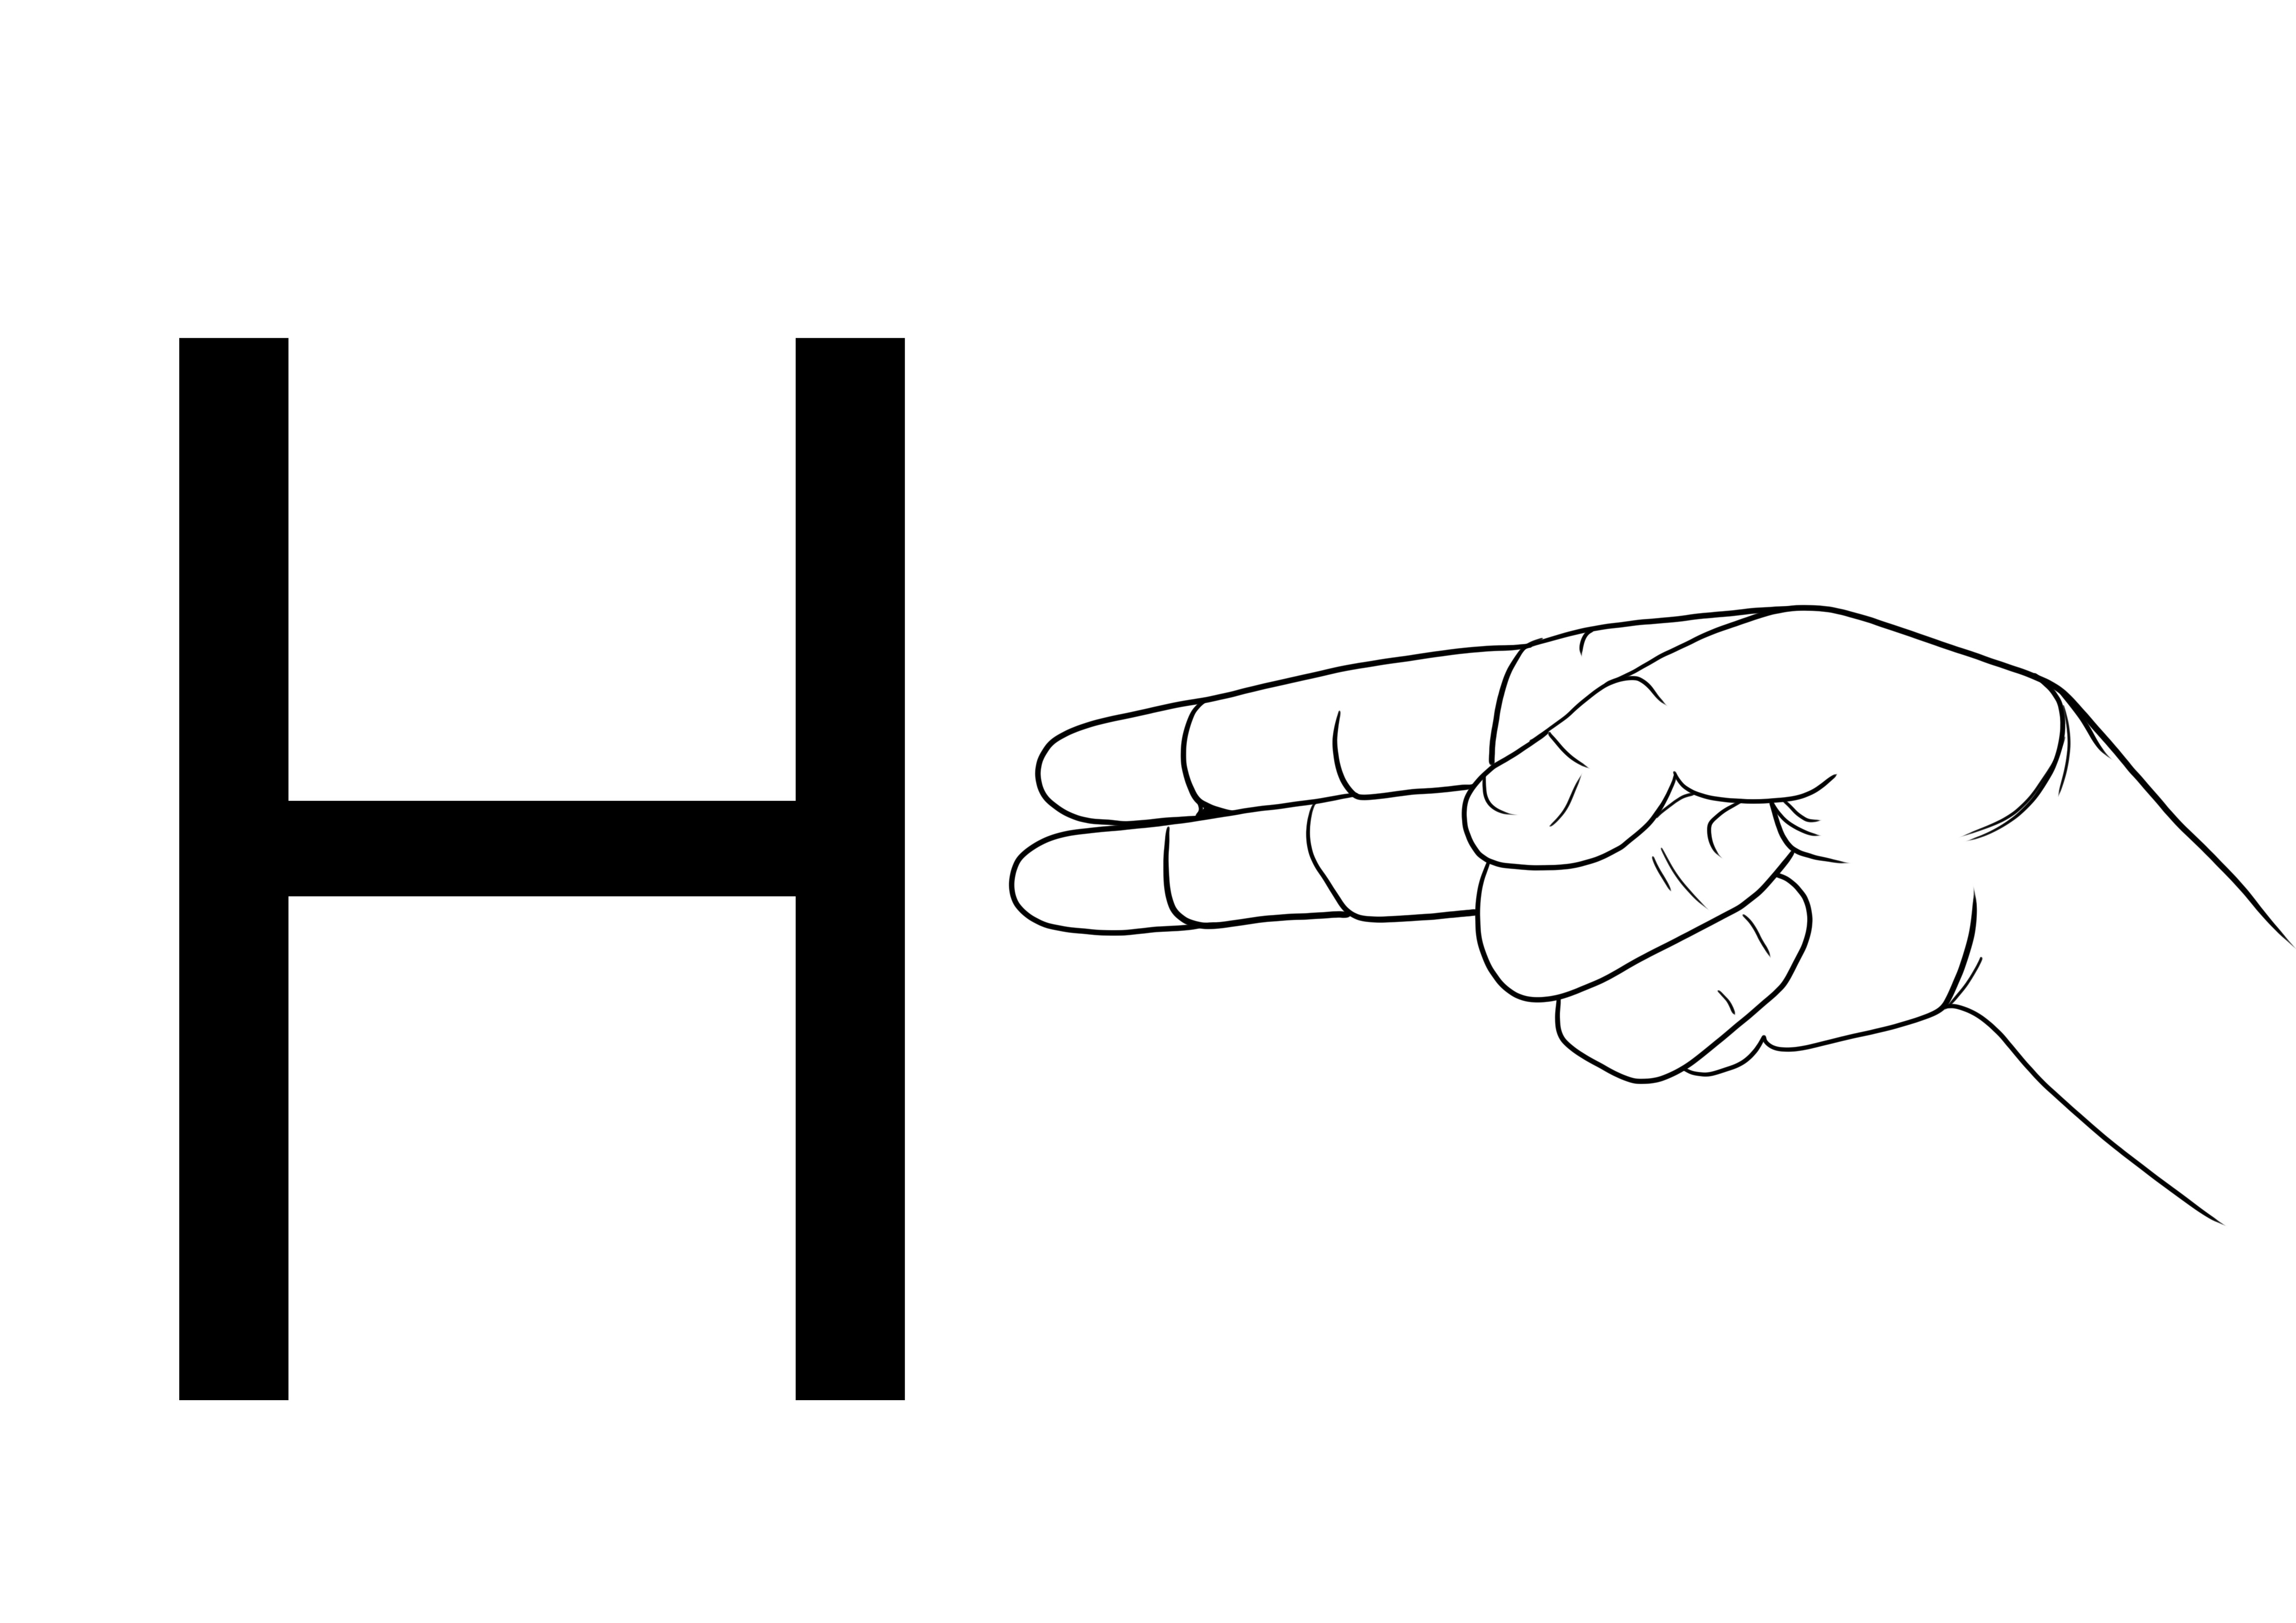 ASL litera H kolorowanka za darmo